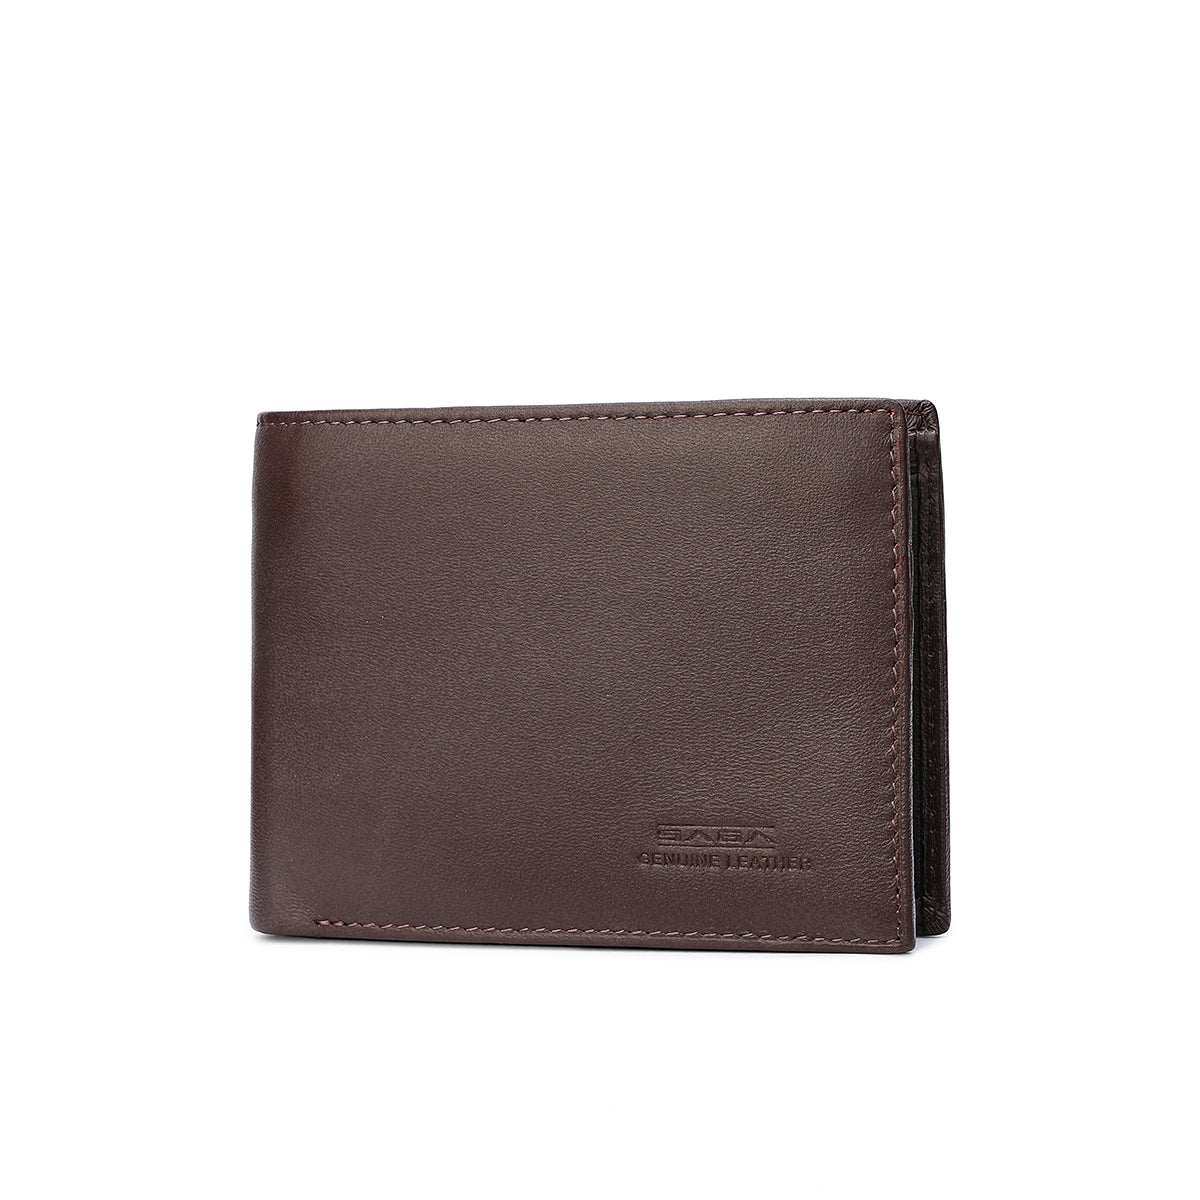 Men's wallet with elegant design, original genuine leather, in black or brown